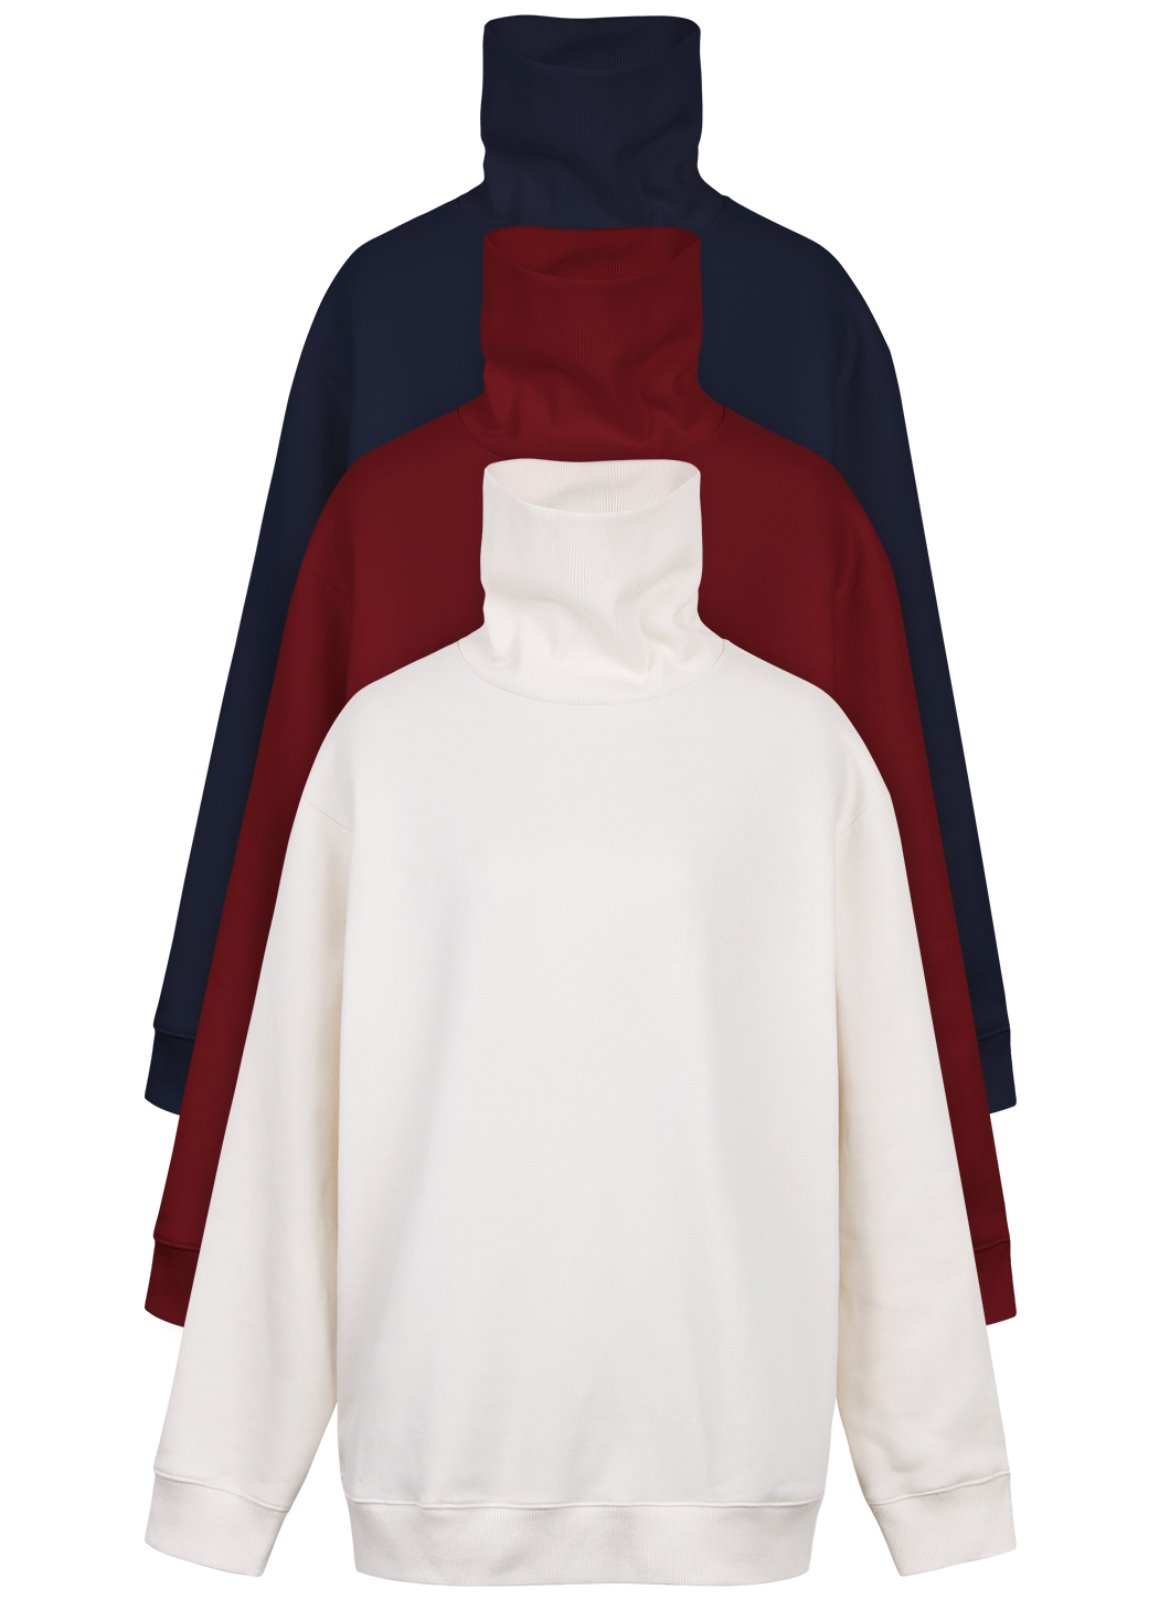 W. Turtleneck Sweat shirts (기모)  Navy/Burgundy/Ivory